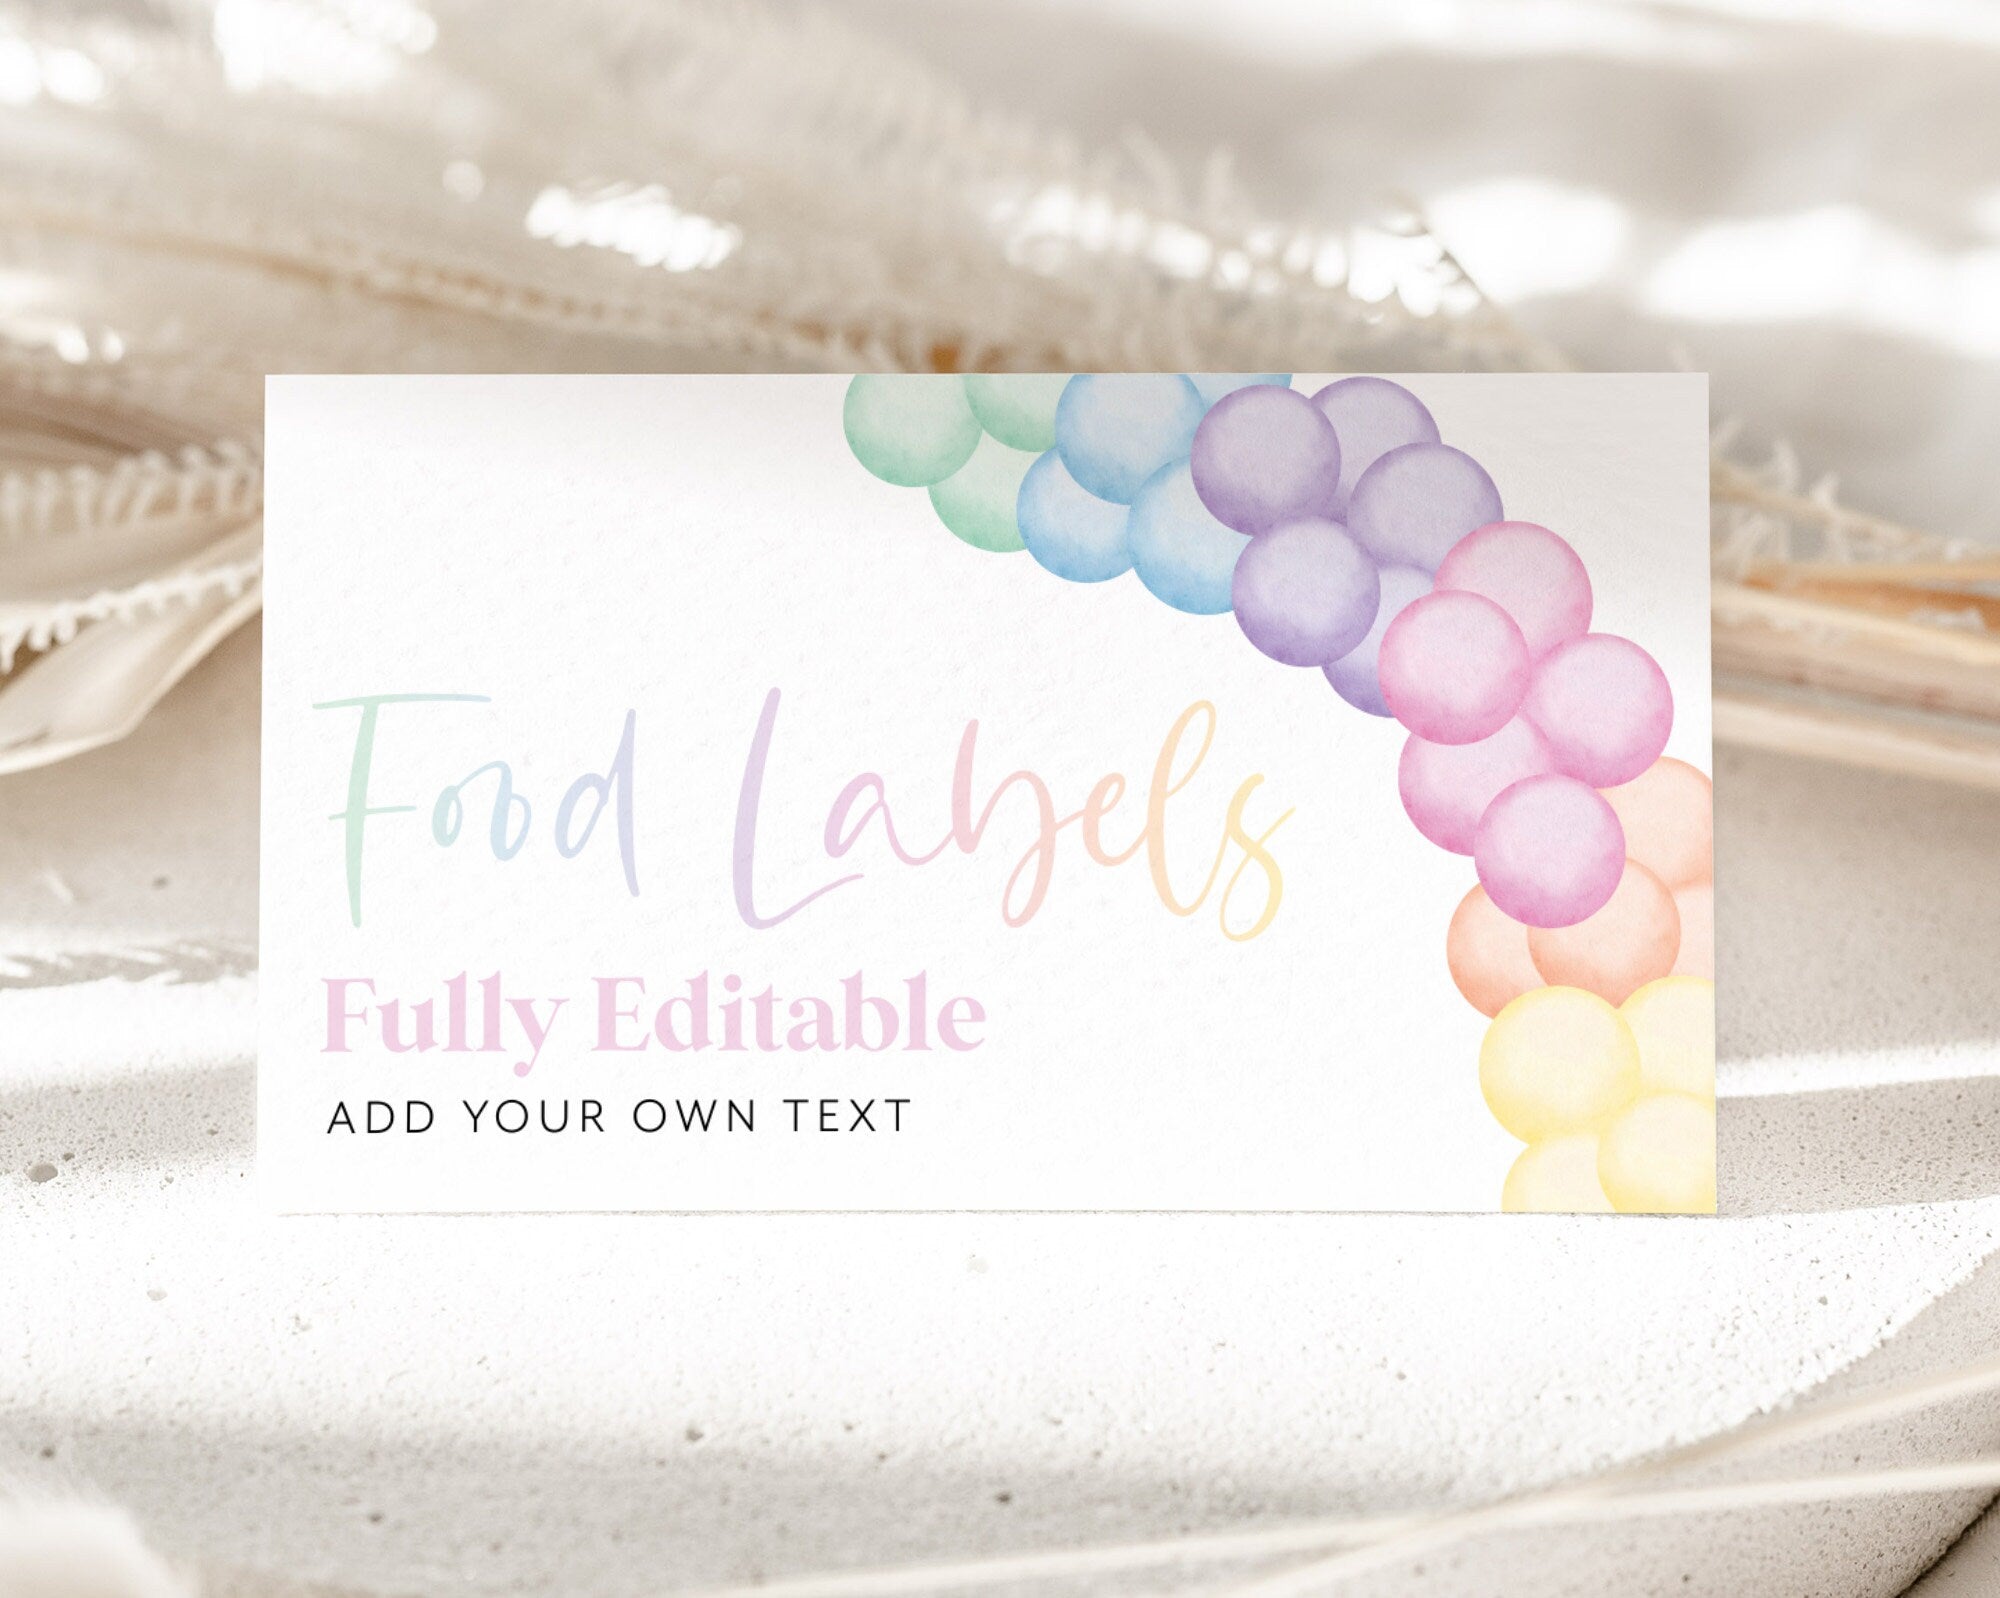 Pastel Rainbow Food Labels, 1st Birthday Food Label Card, Food Tent Card, Birthday Food Tags, Folded Food Cards, Tented Food Labels, Rainbow